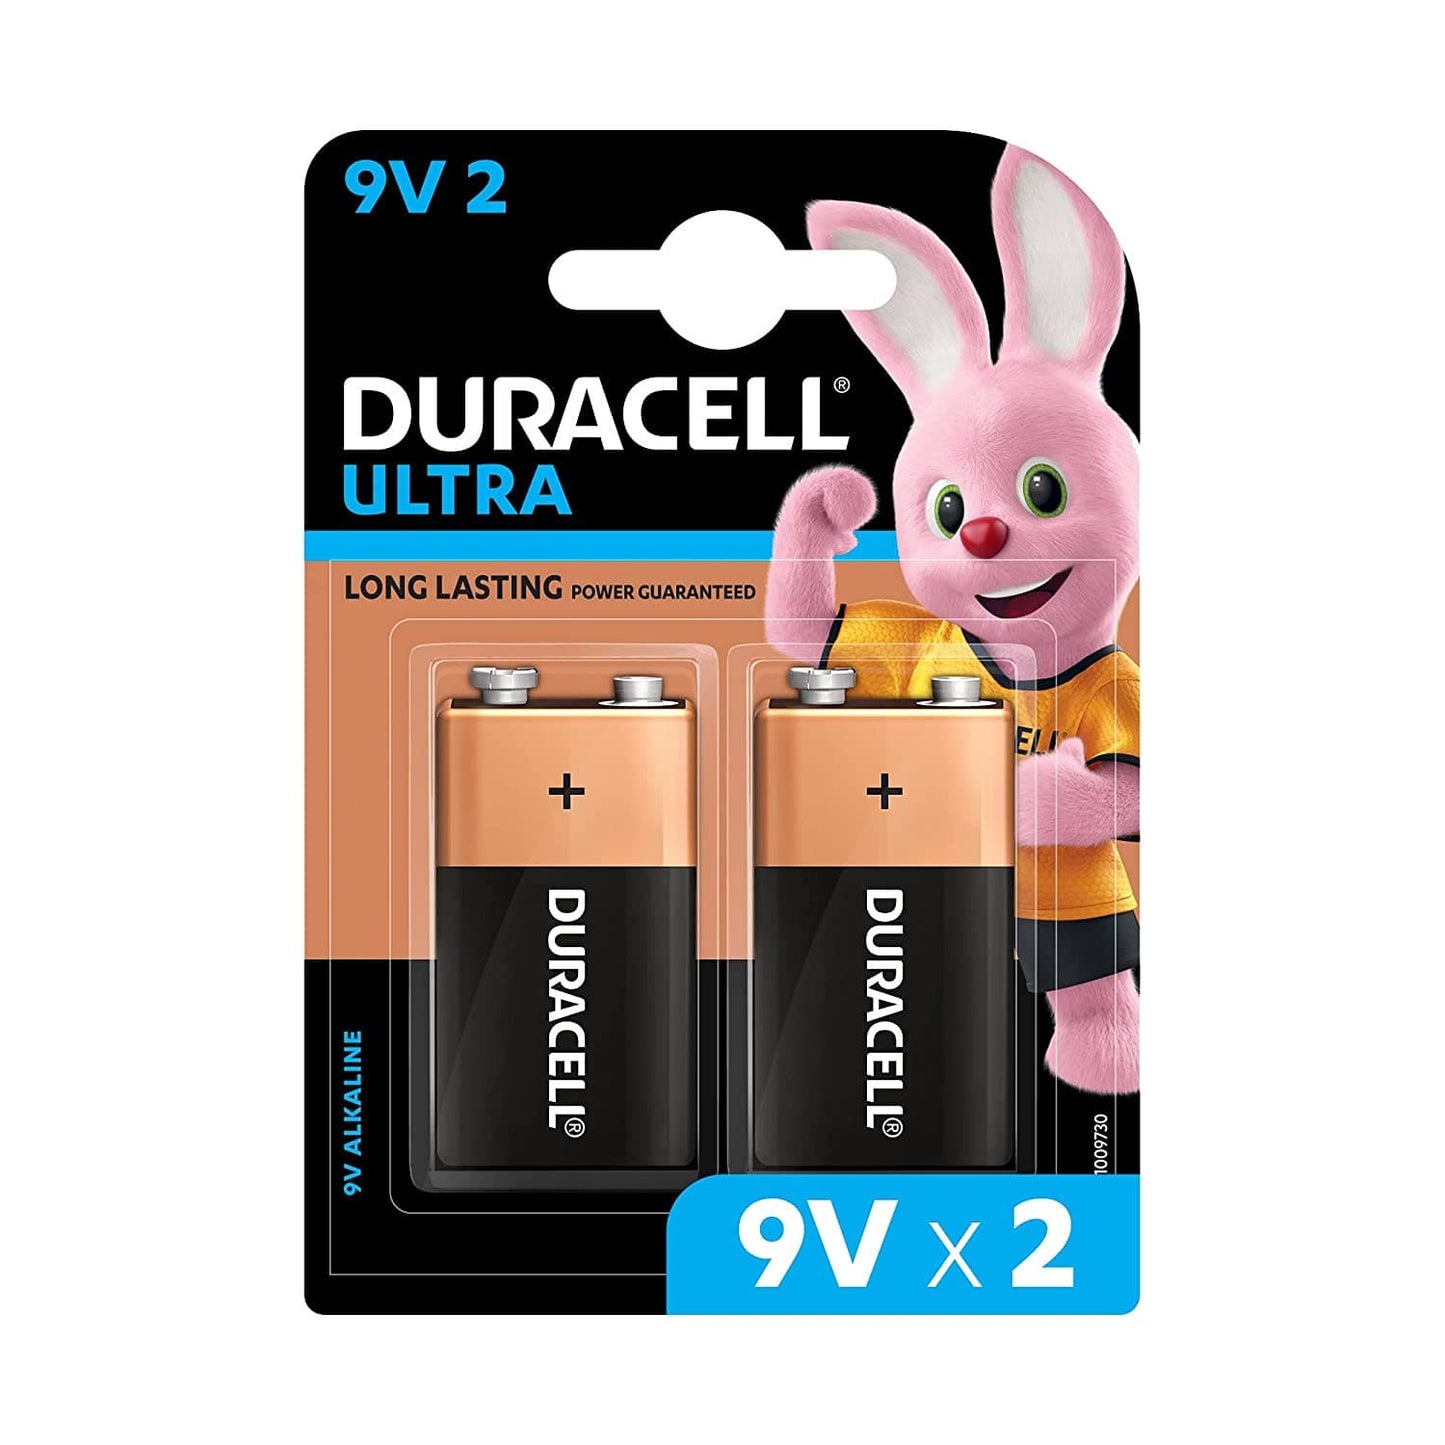 Duracell Ultra Alkaline 9V 2 Batteries.